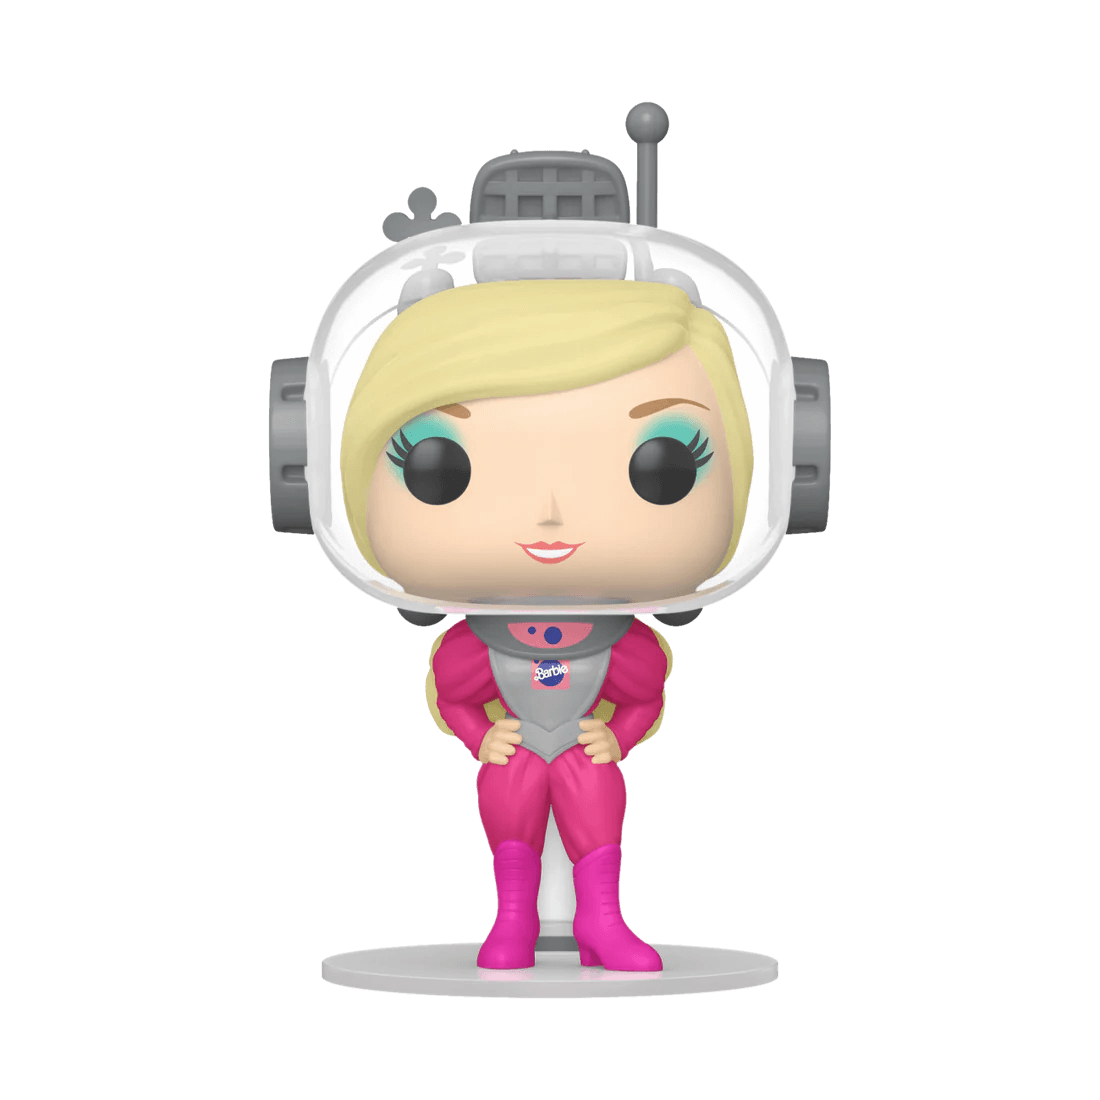 FUN81052 Barbie - Barbie Astronaut 65th Anniversary Pop! Viny - Funko - Titan Pop Culture